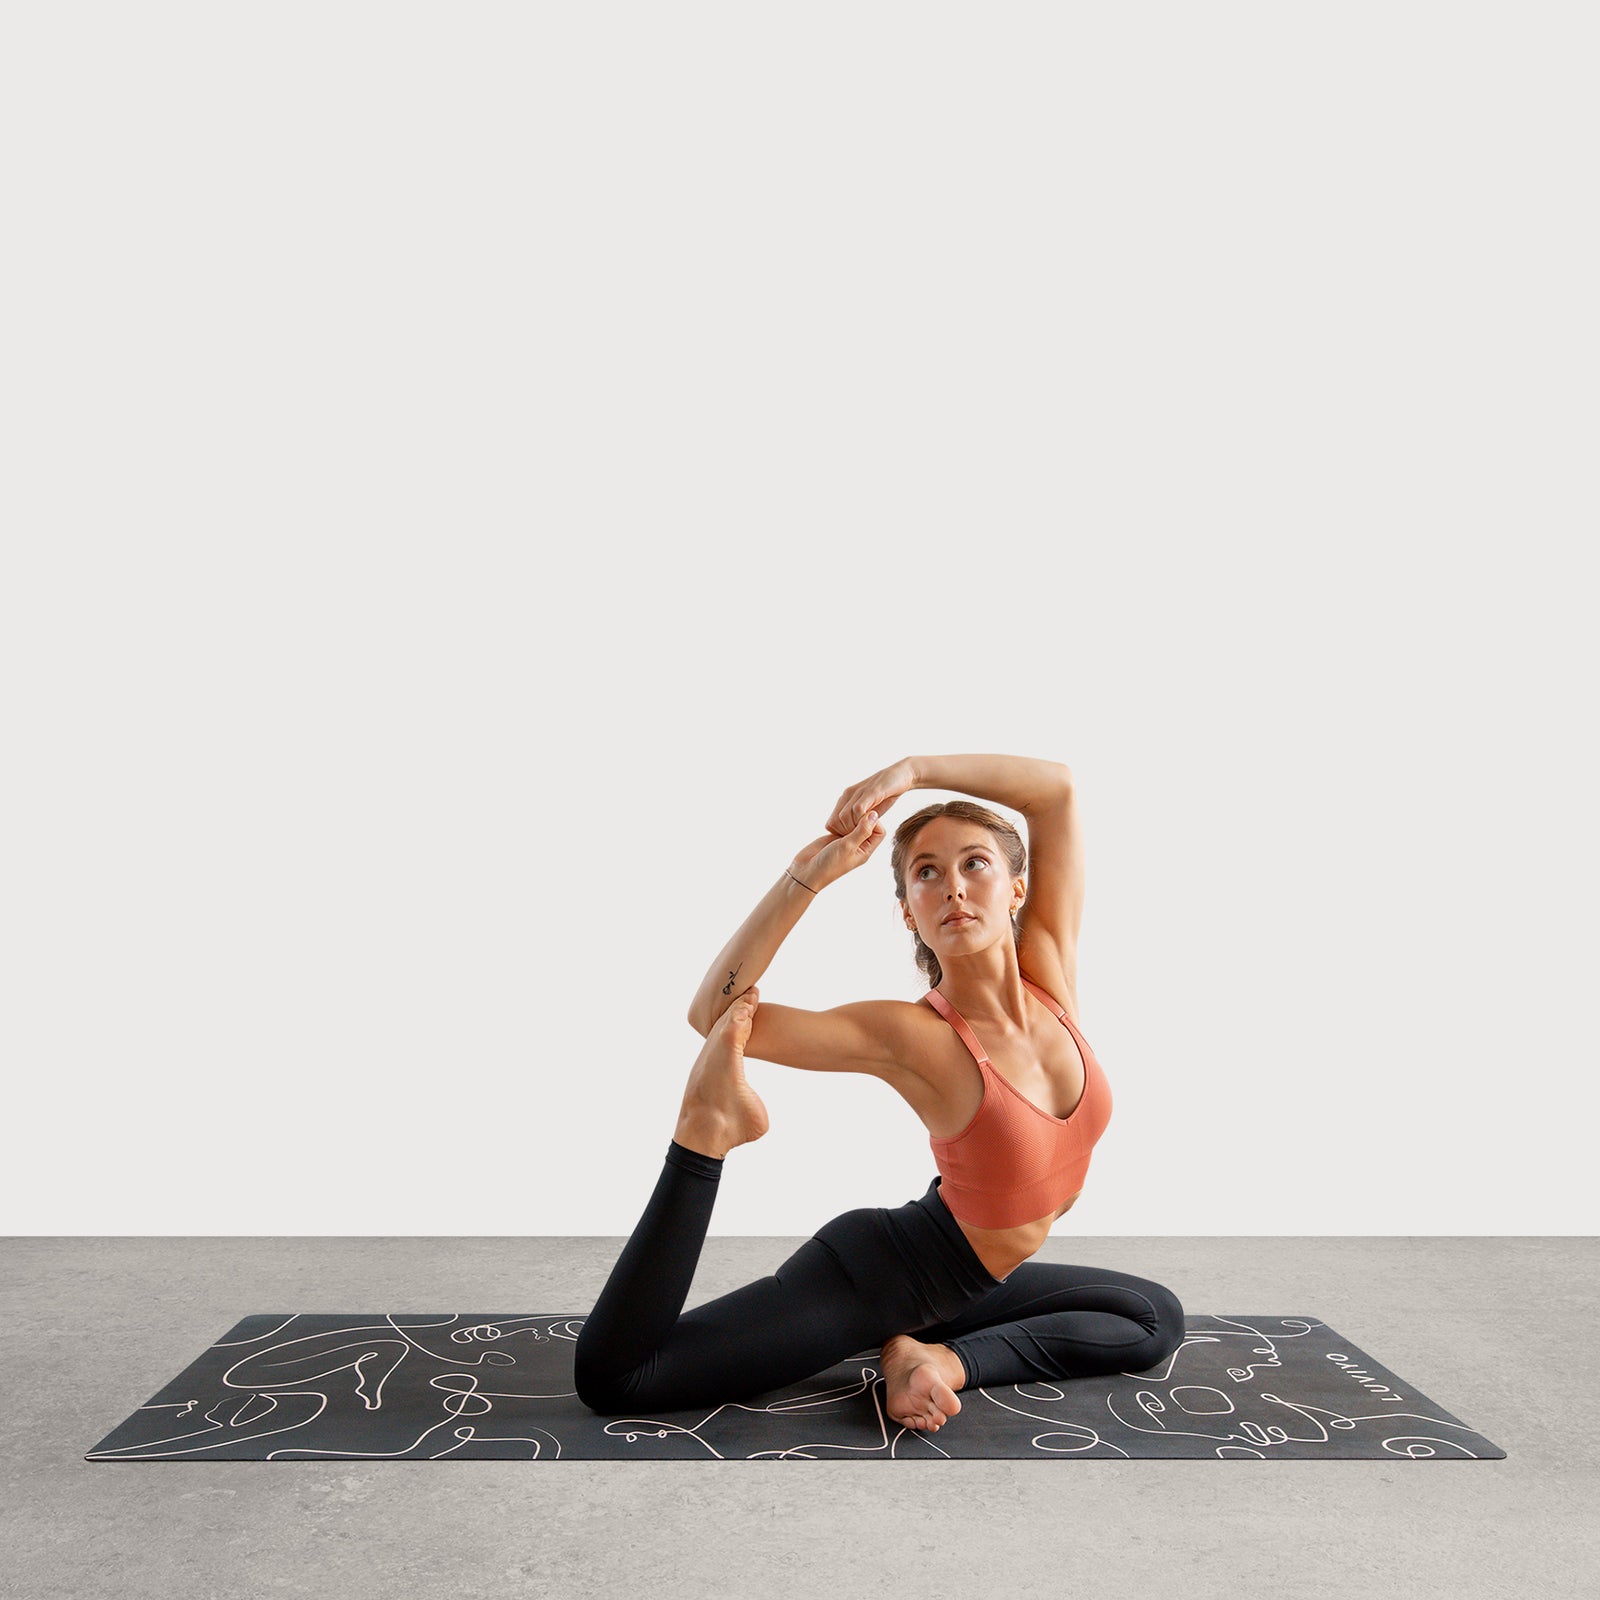 Grand tapis de yoga pliable neutre